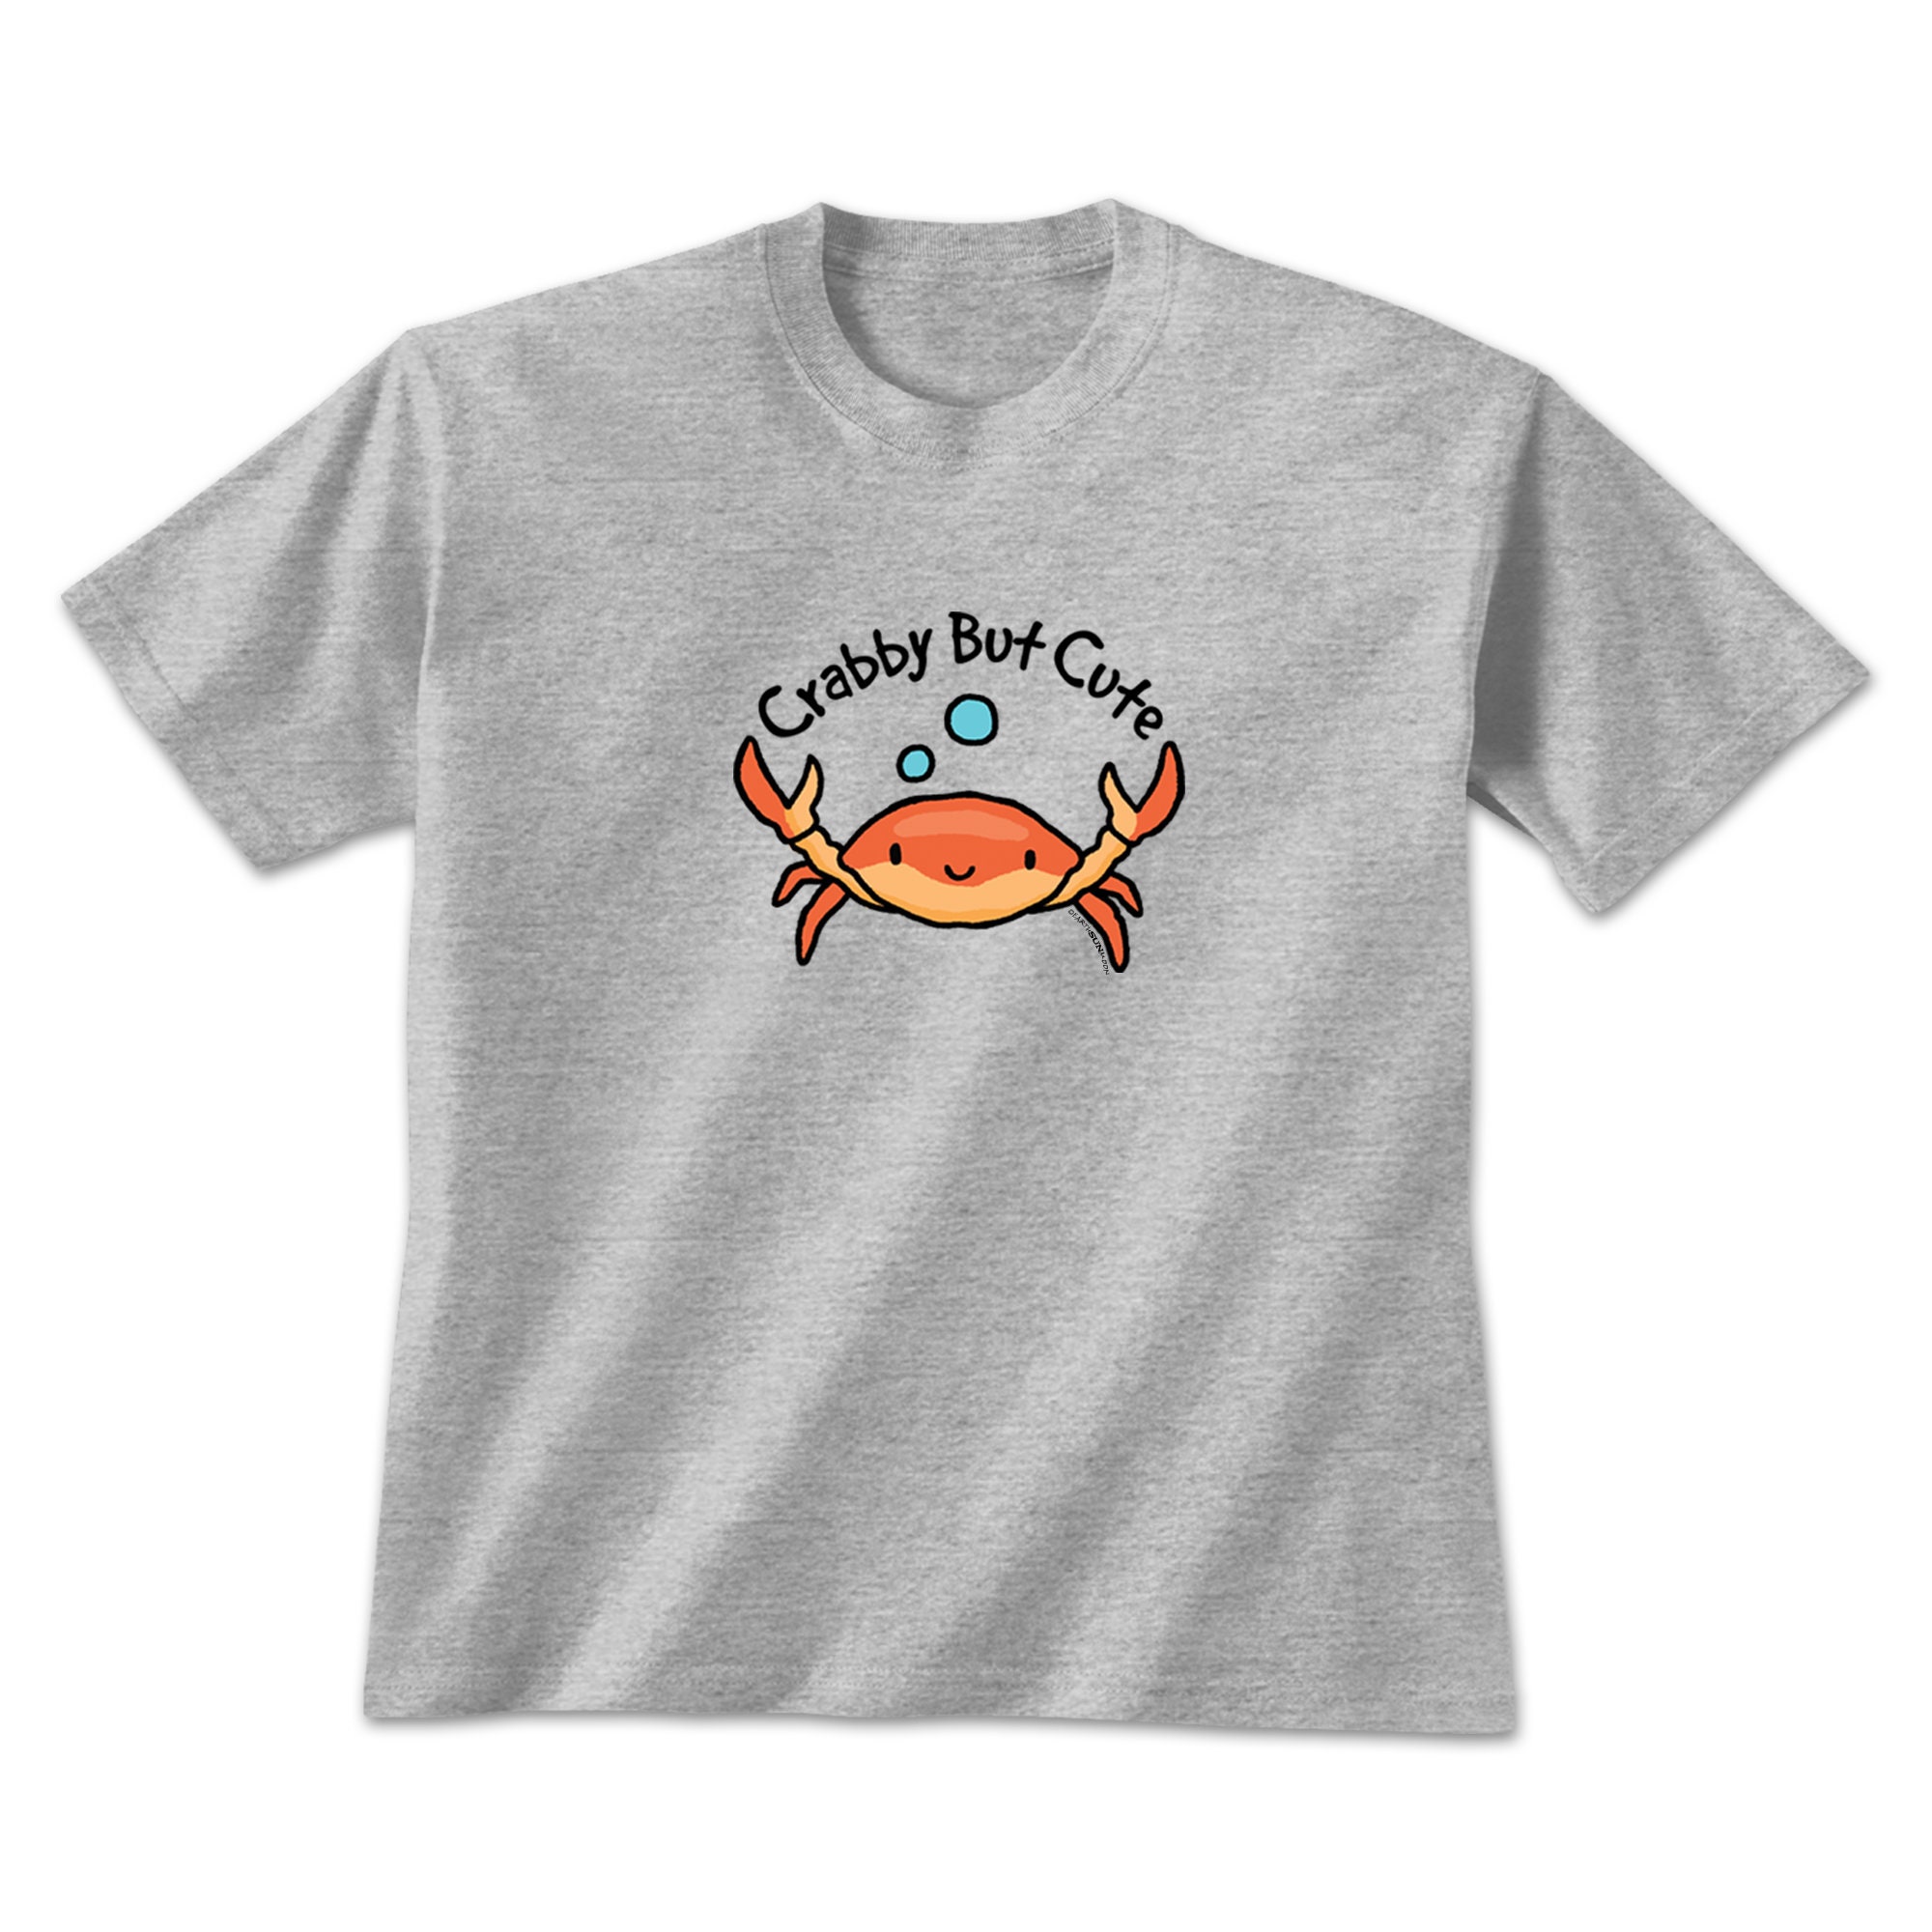 Cute Toddler Shirt Graphic T-shirt but